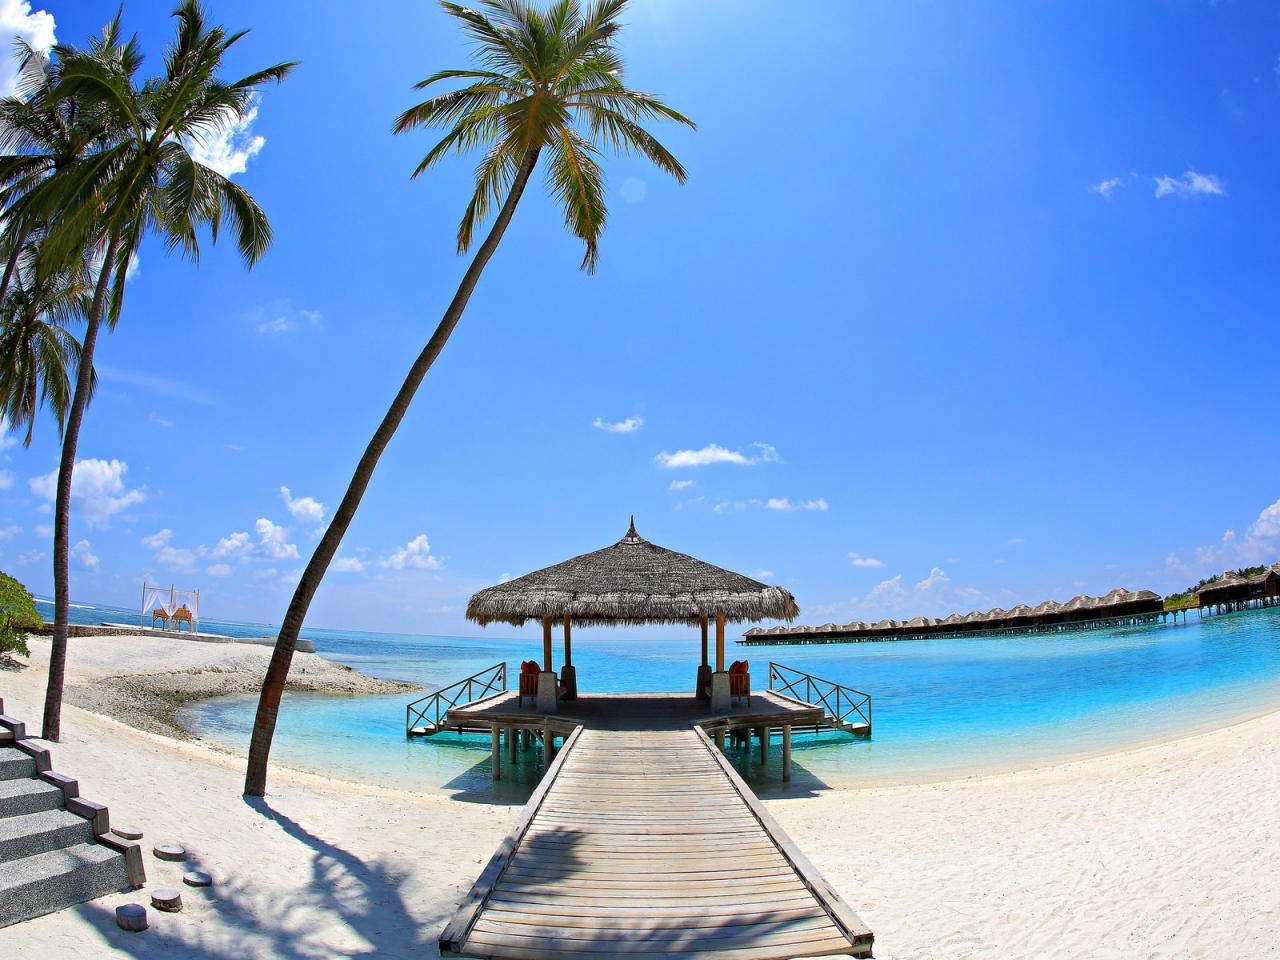 Sunny Palm Beach Corner  for 1280 x 960 resolution